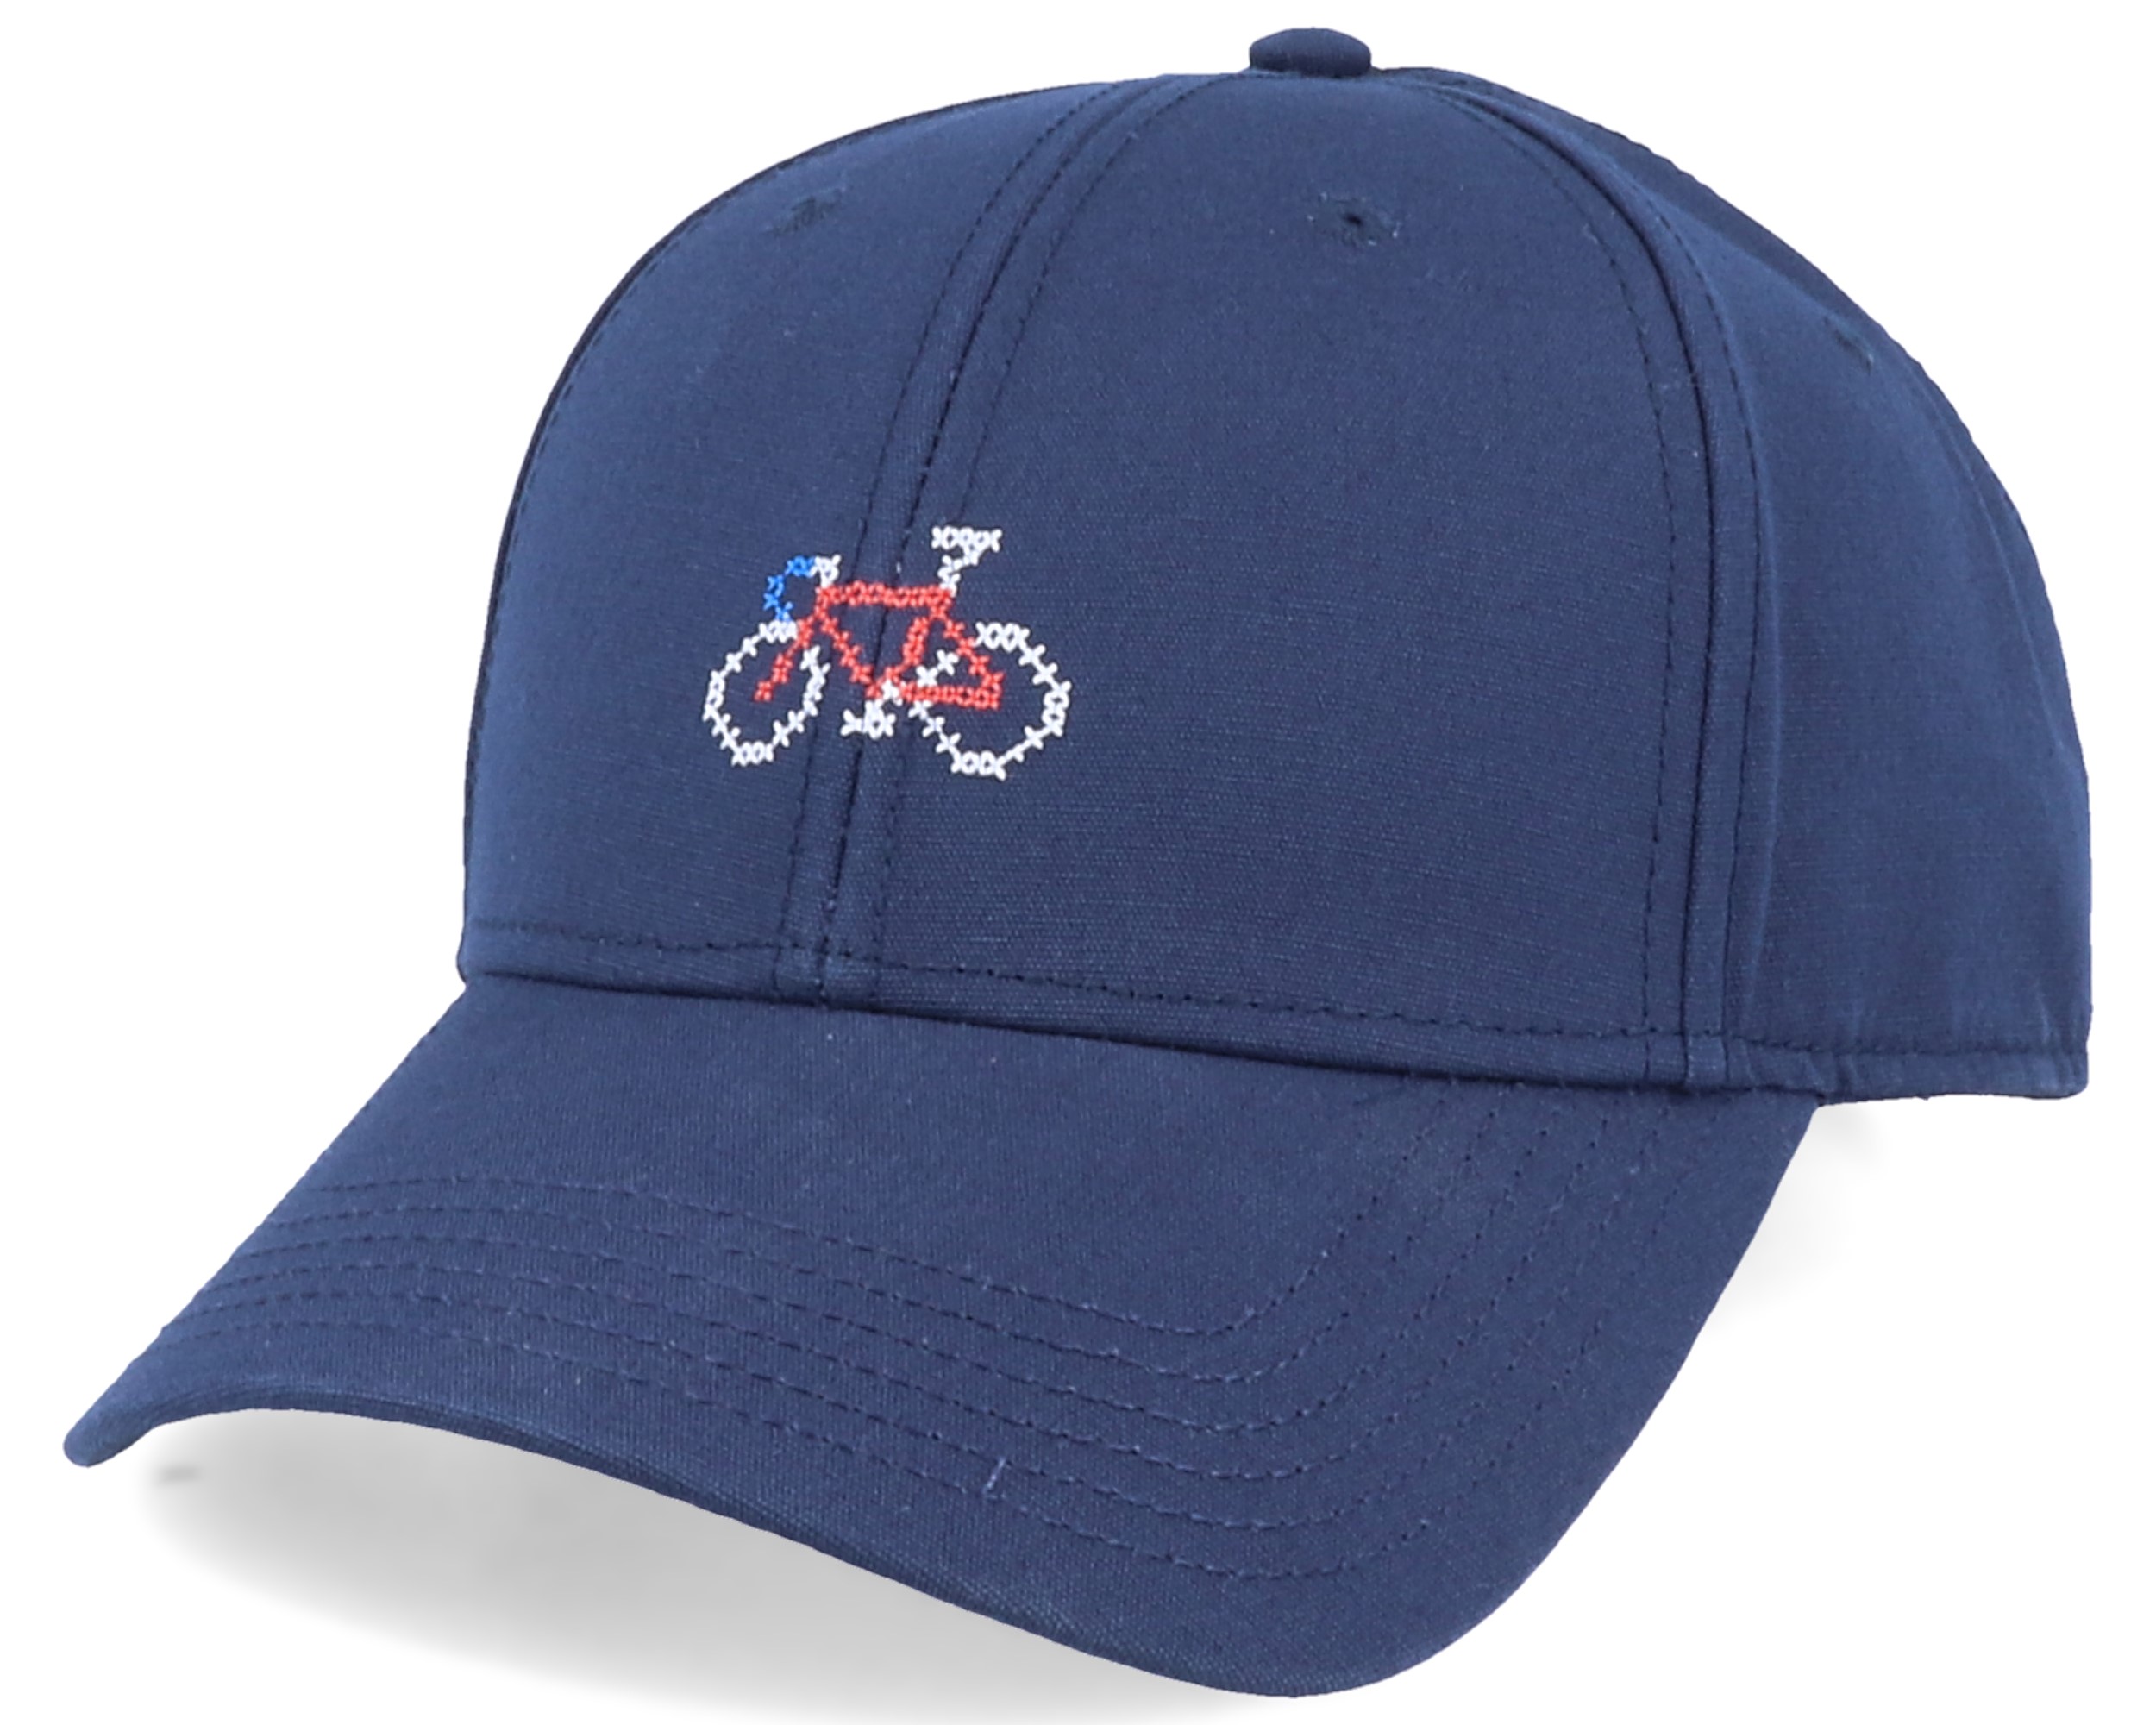 Sport Cap Stitch Bike Navy Adjustable - Dedicated cap